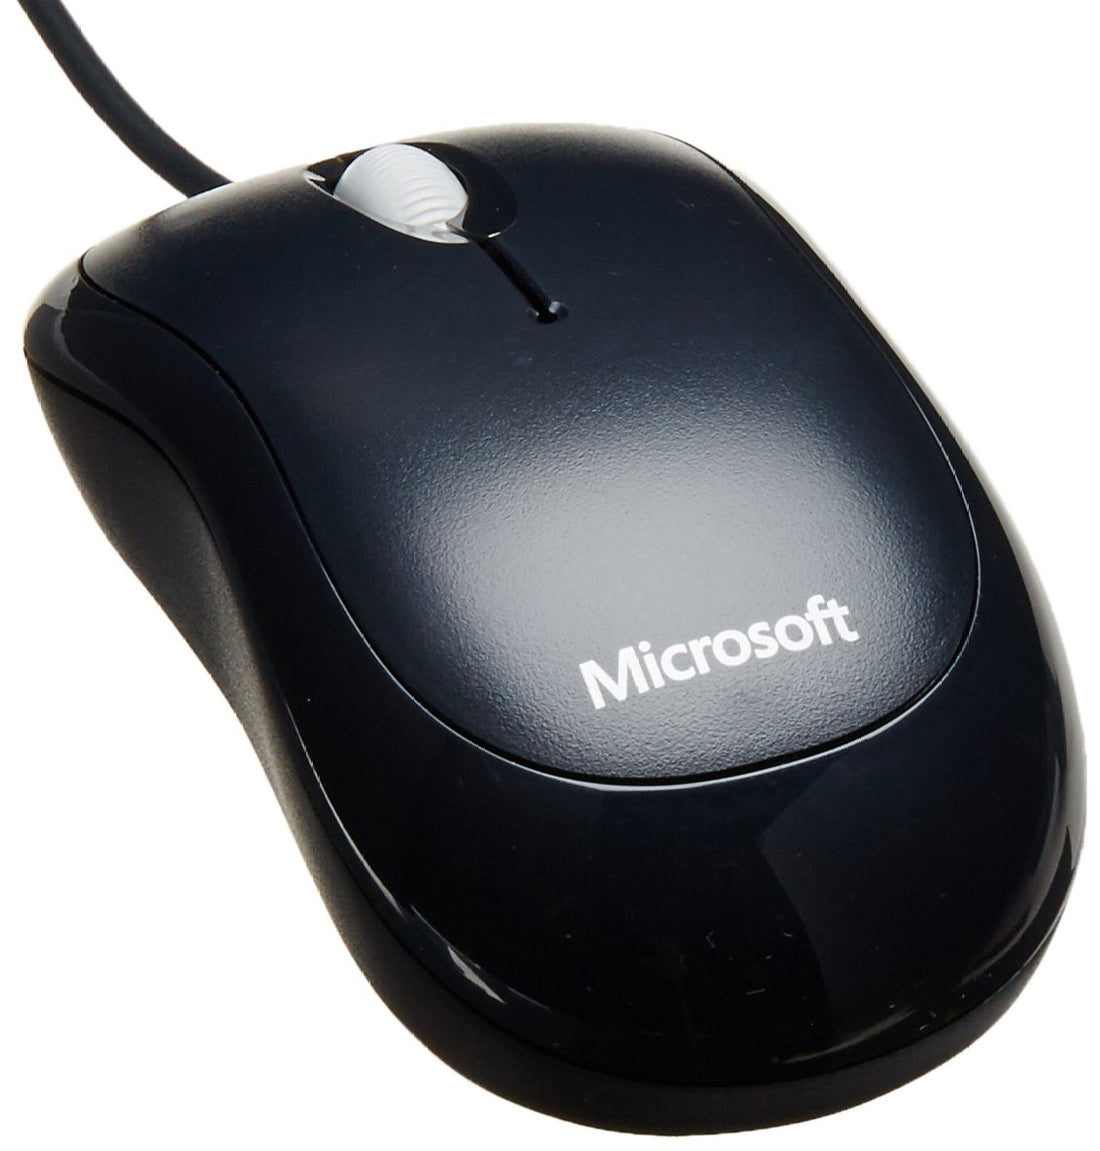 Microsoft Wired Desktop 600 with USB Port (Black)